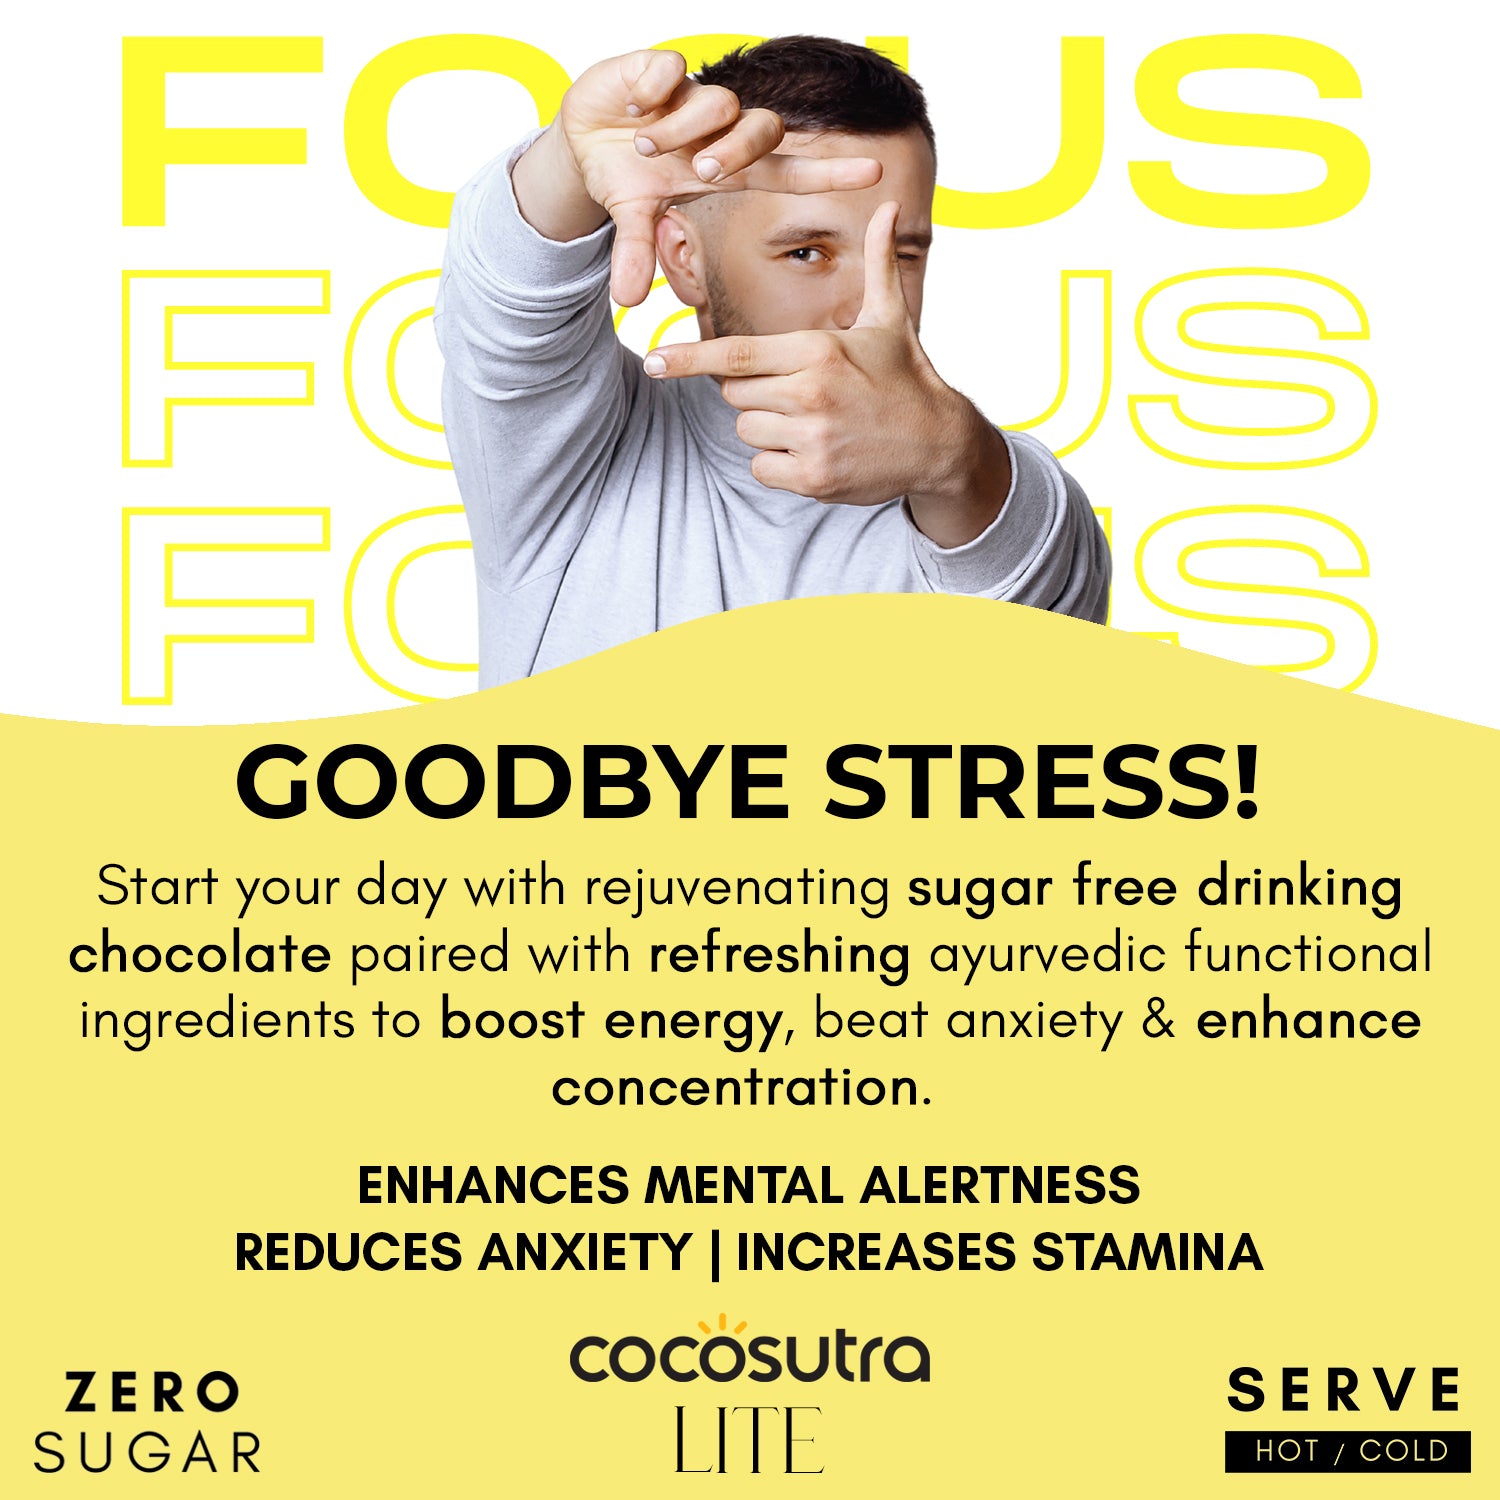 Cocosutra Focus - Sugar Free Drinking Chocolate Mix - Ashwagandha Supplement - Benefits